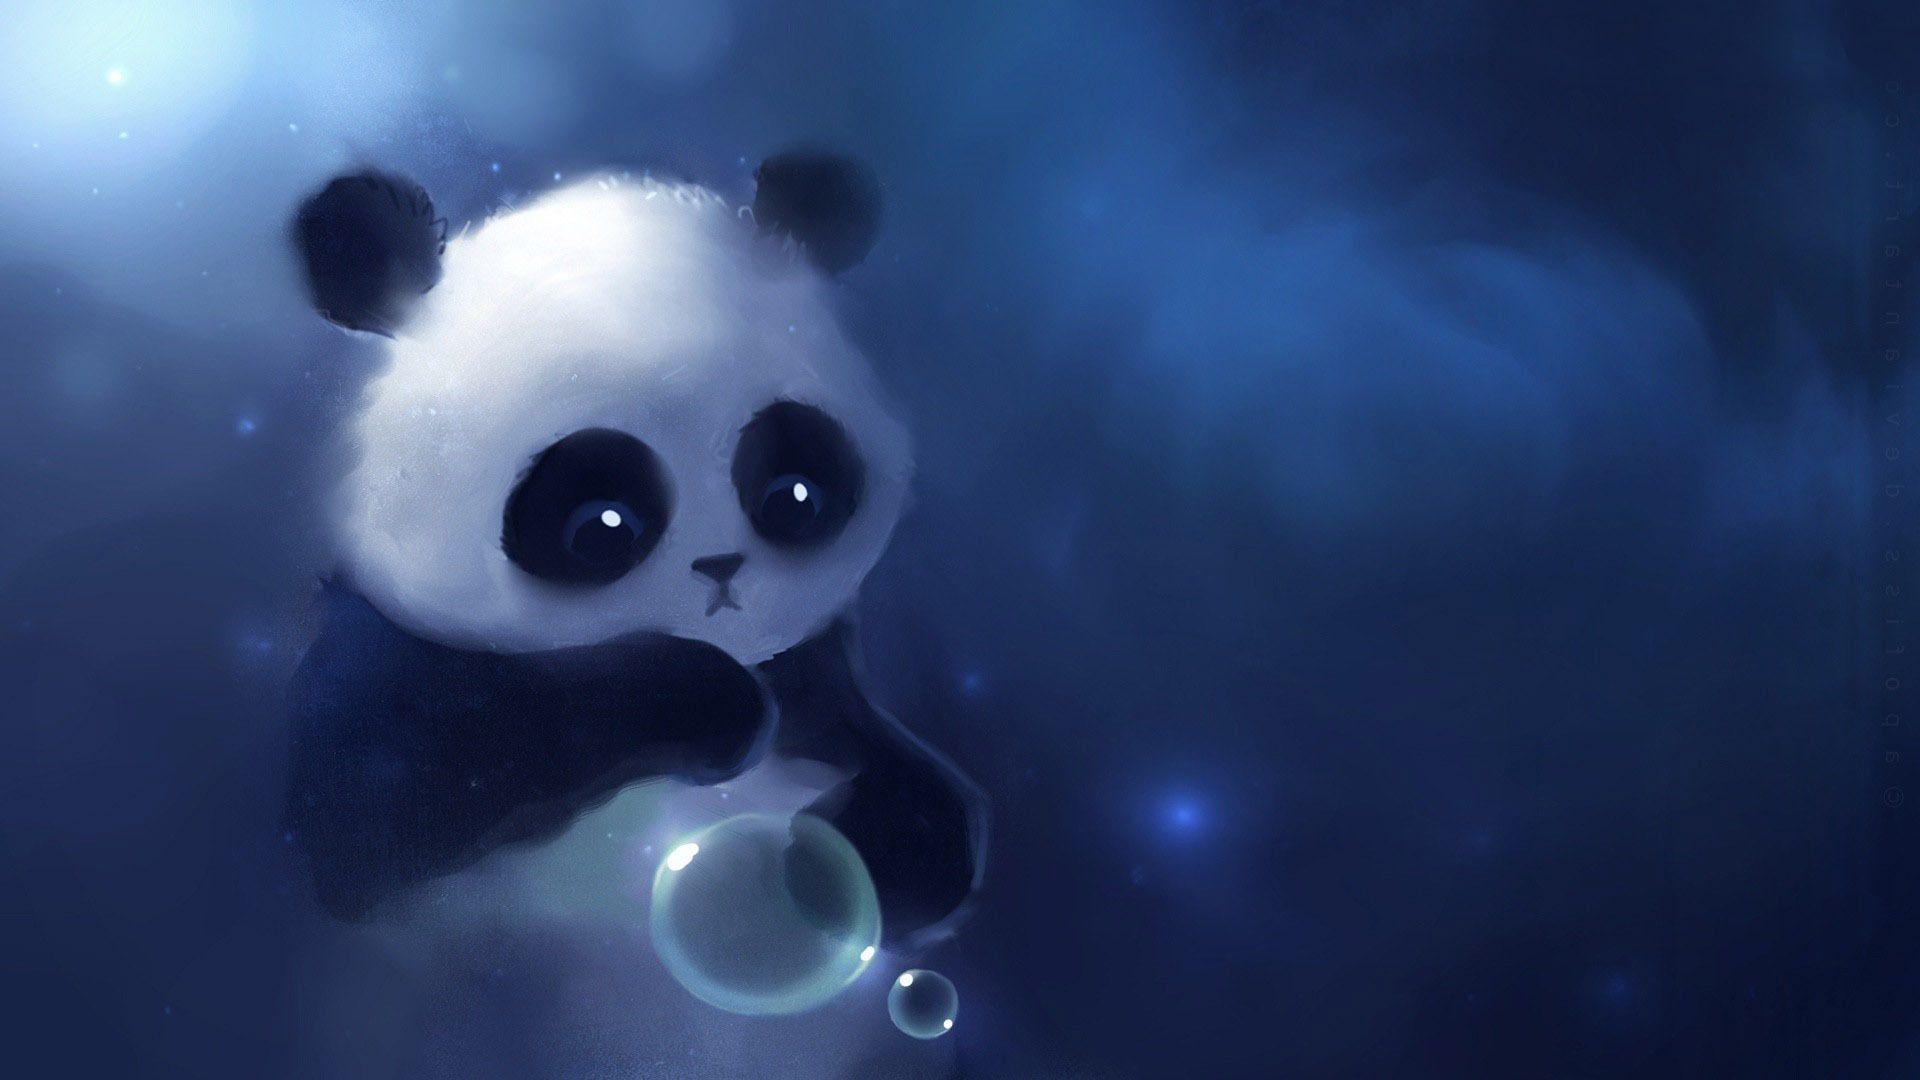 Wallpaper.wiki Cute Panda Wallpaper Tumblr PIC WPE007520